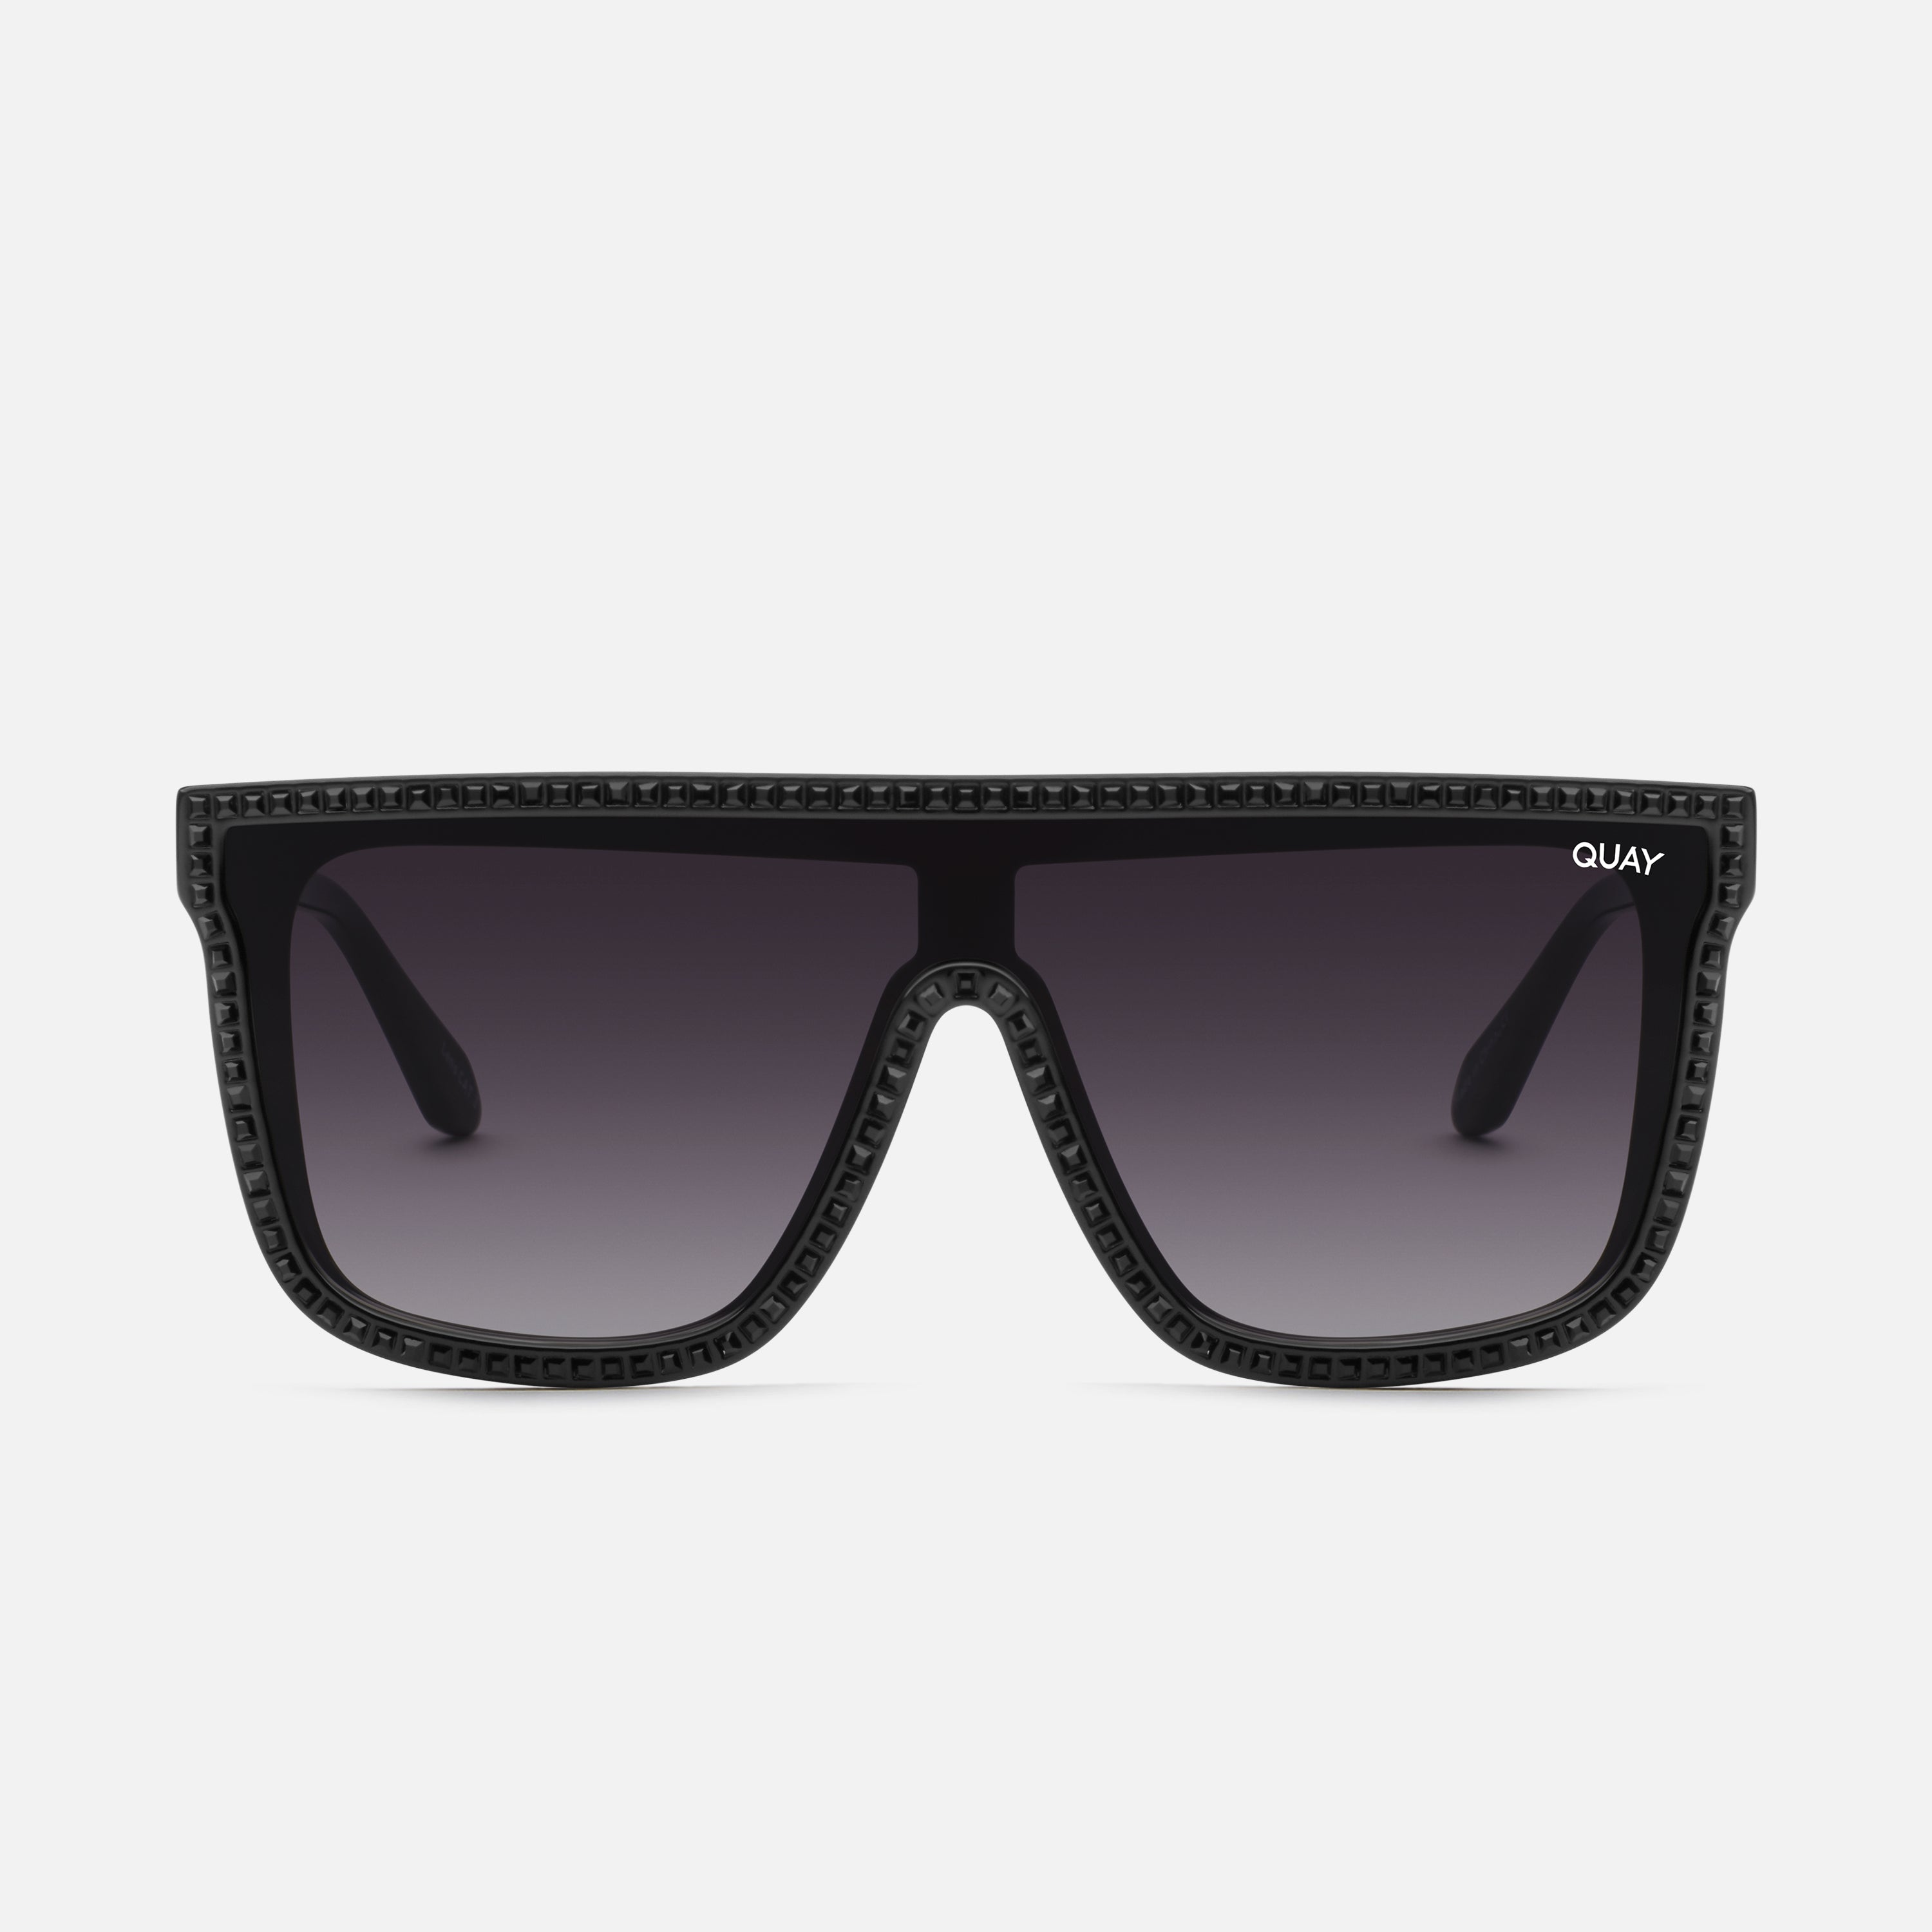 Cheap Sunglasses for Women | ASOS Outlet